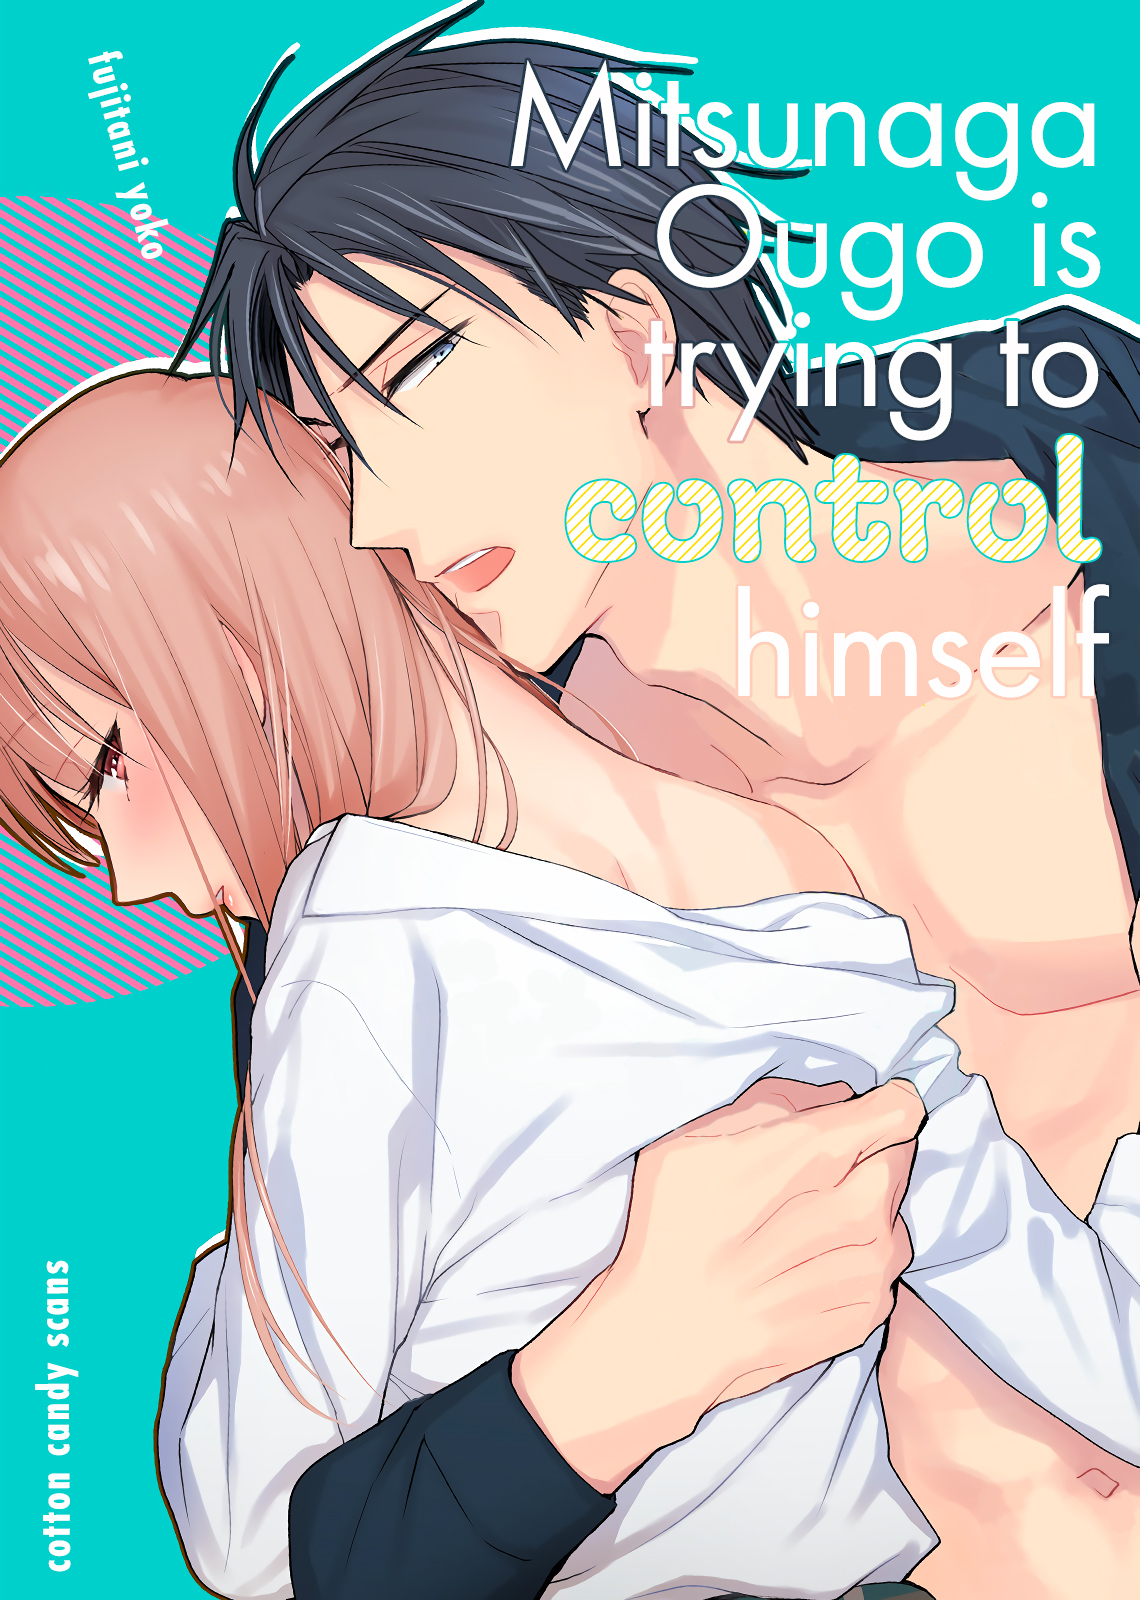 Mitsunaga Ougo is Trying to Control Himself Manga